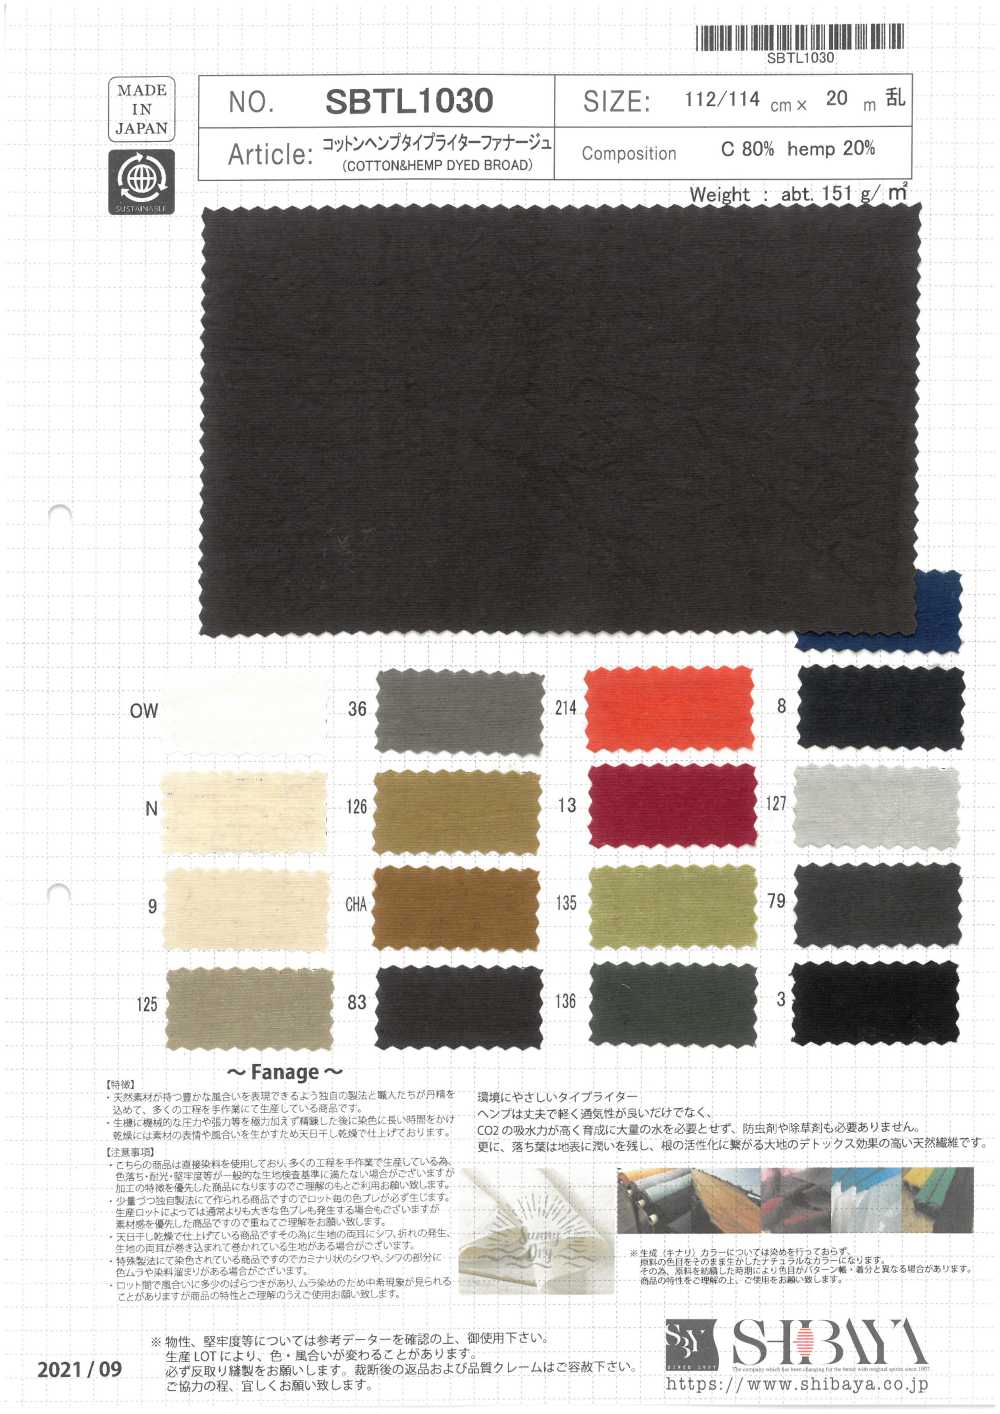 SBTL1030 Cotton / Hemp Typewritter Cloth Fanage[Textile / Fabric] SHIBAYA